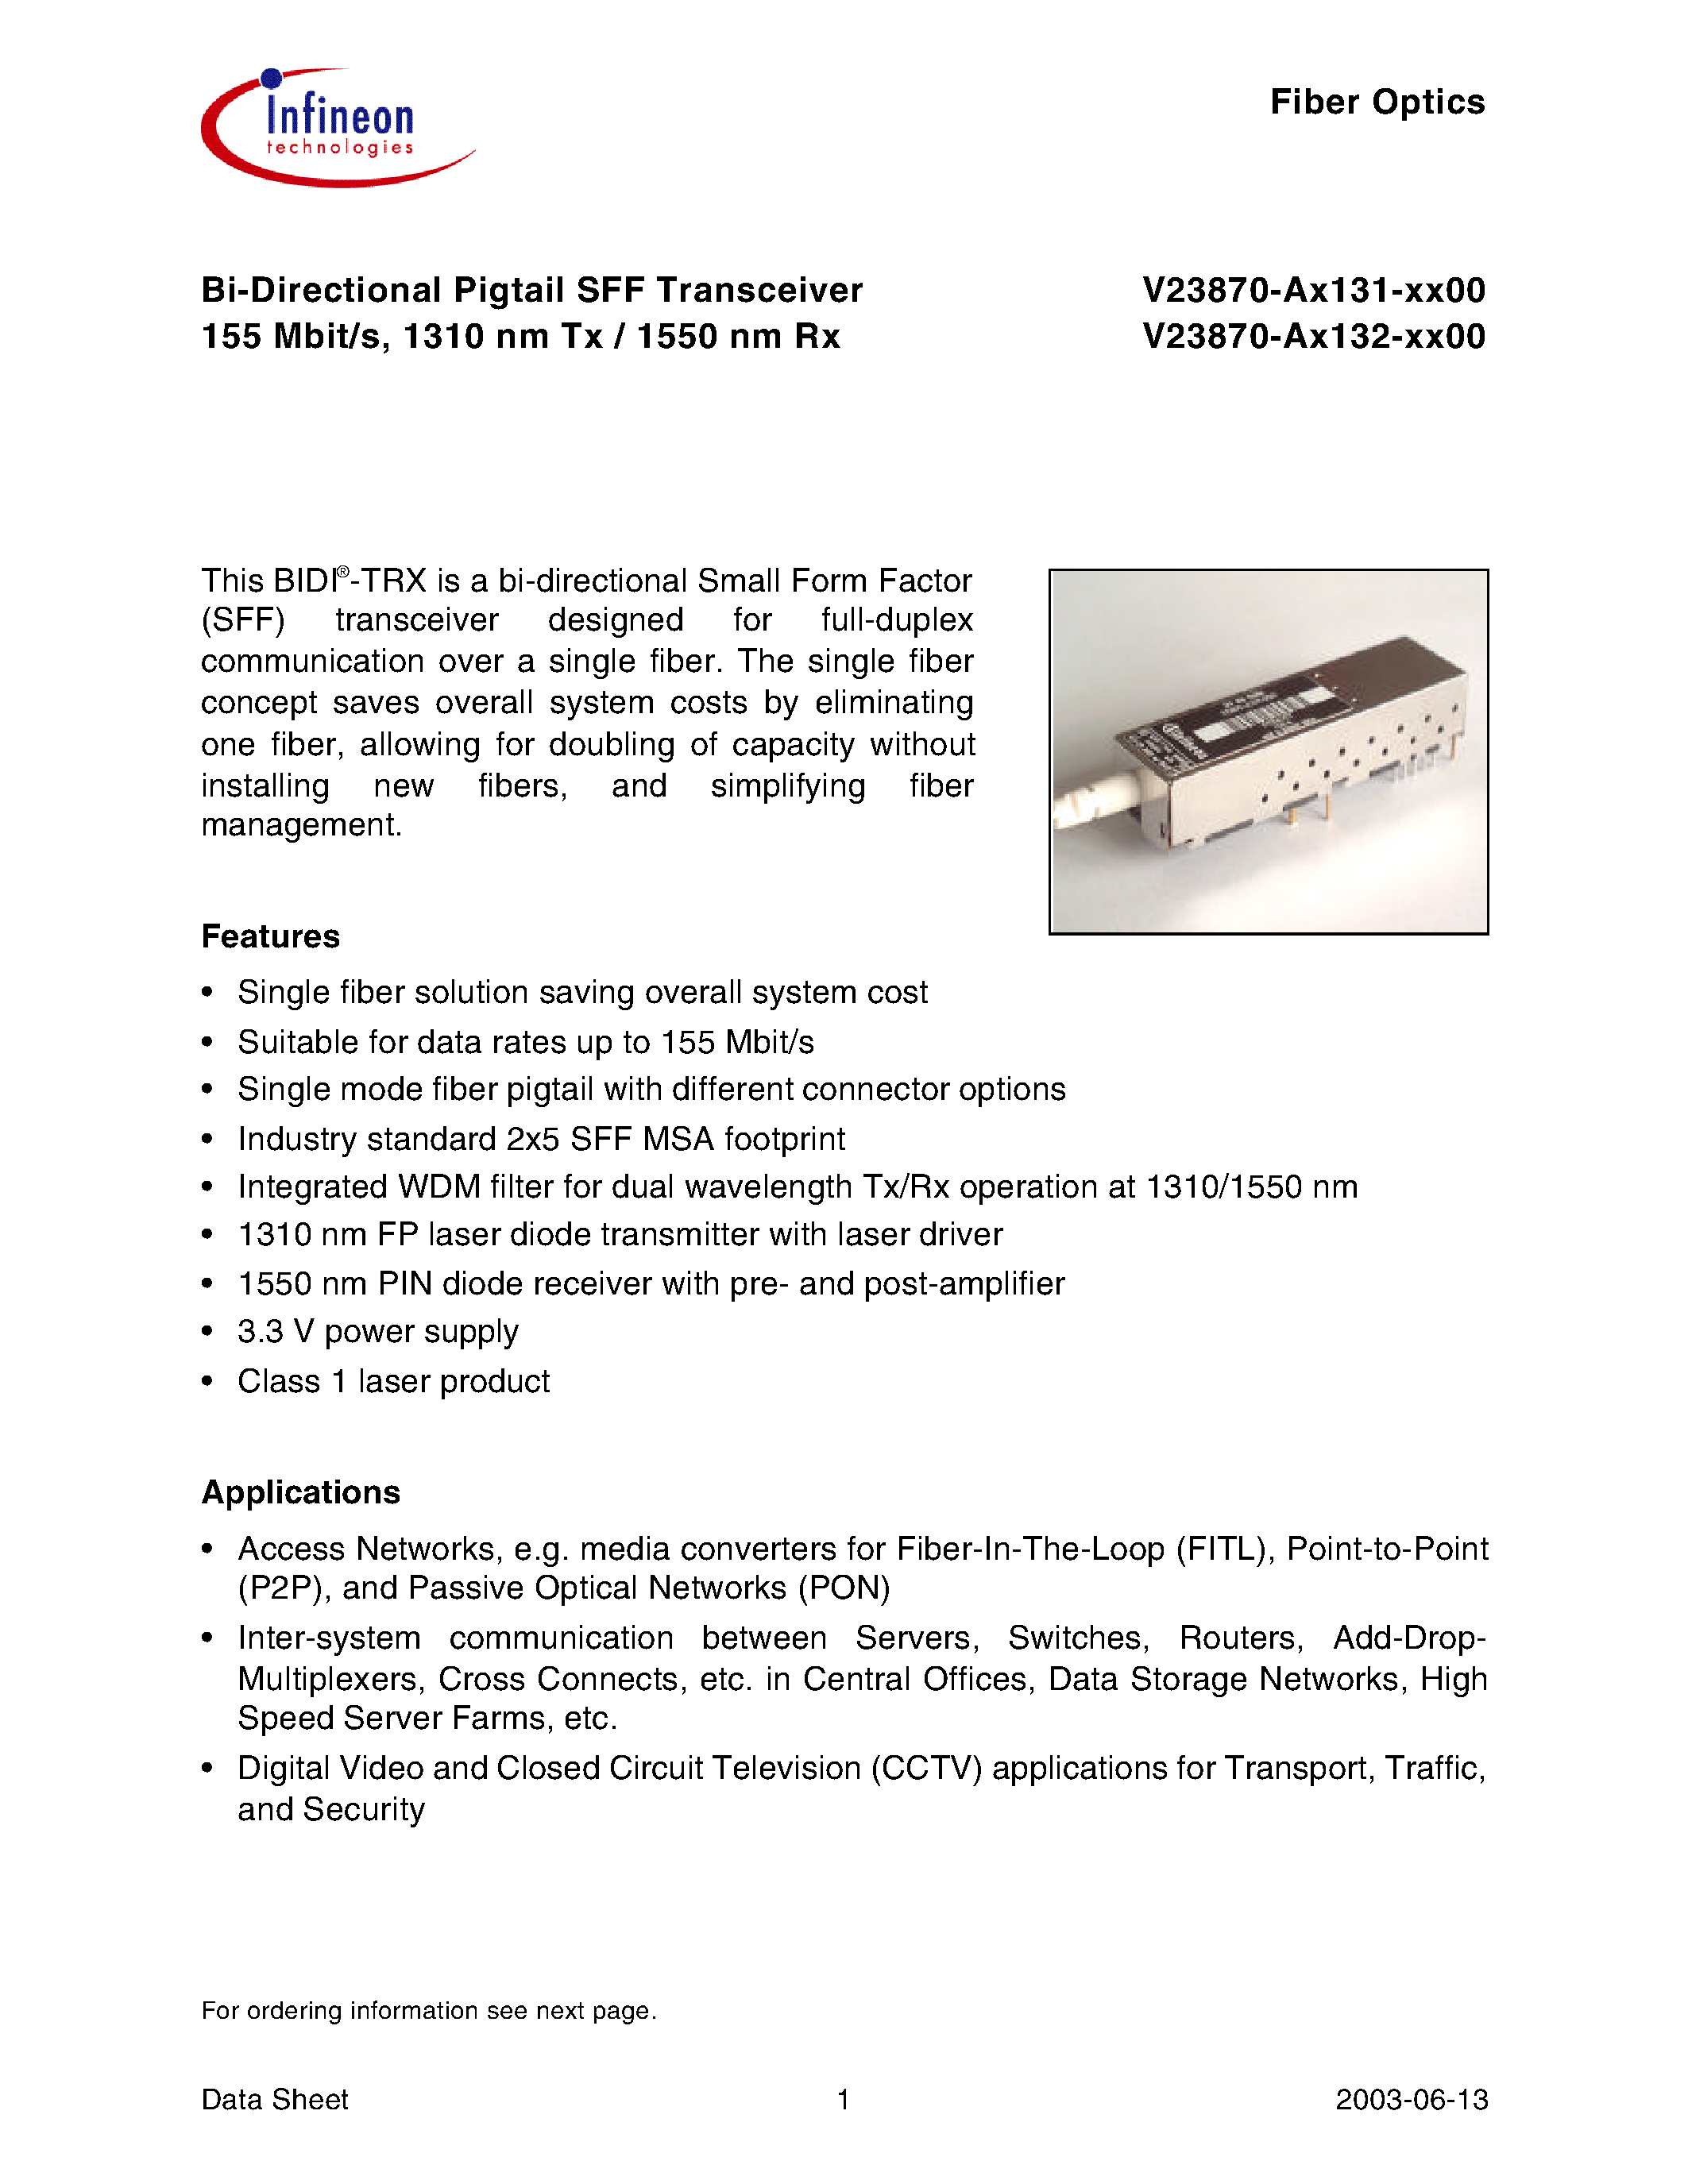 Даташит V23870-A3131-A100 - Bi-Directional Pigtail SFF Transceiver 155 Mbit/s/ 1310 nm Tx / 1550 nm Rx страница 1